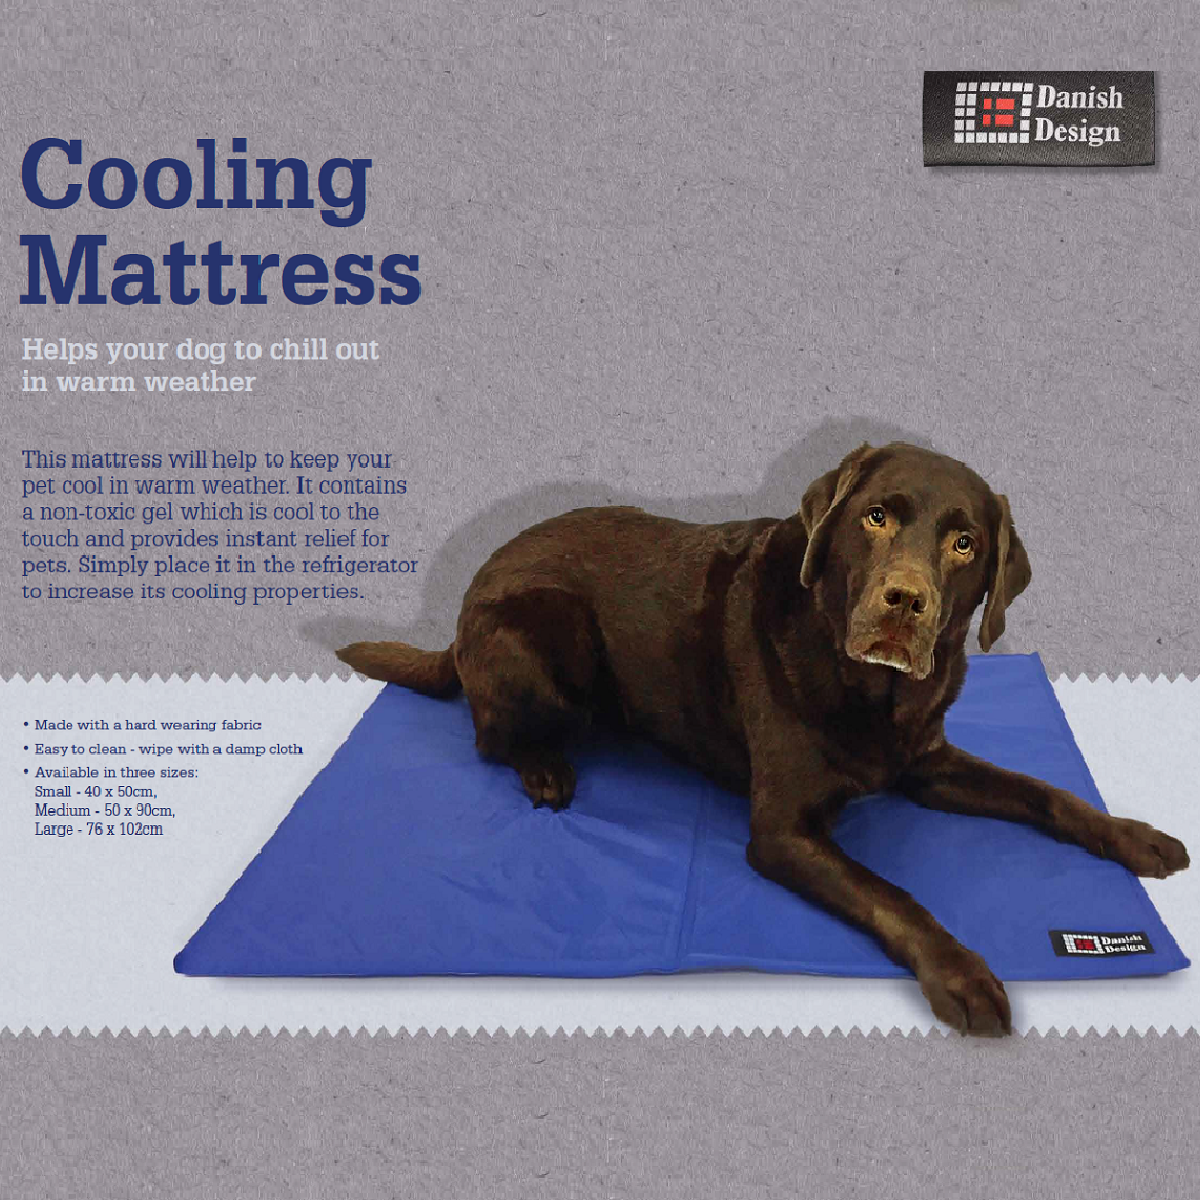 Danish Design - Cooling Mattress